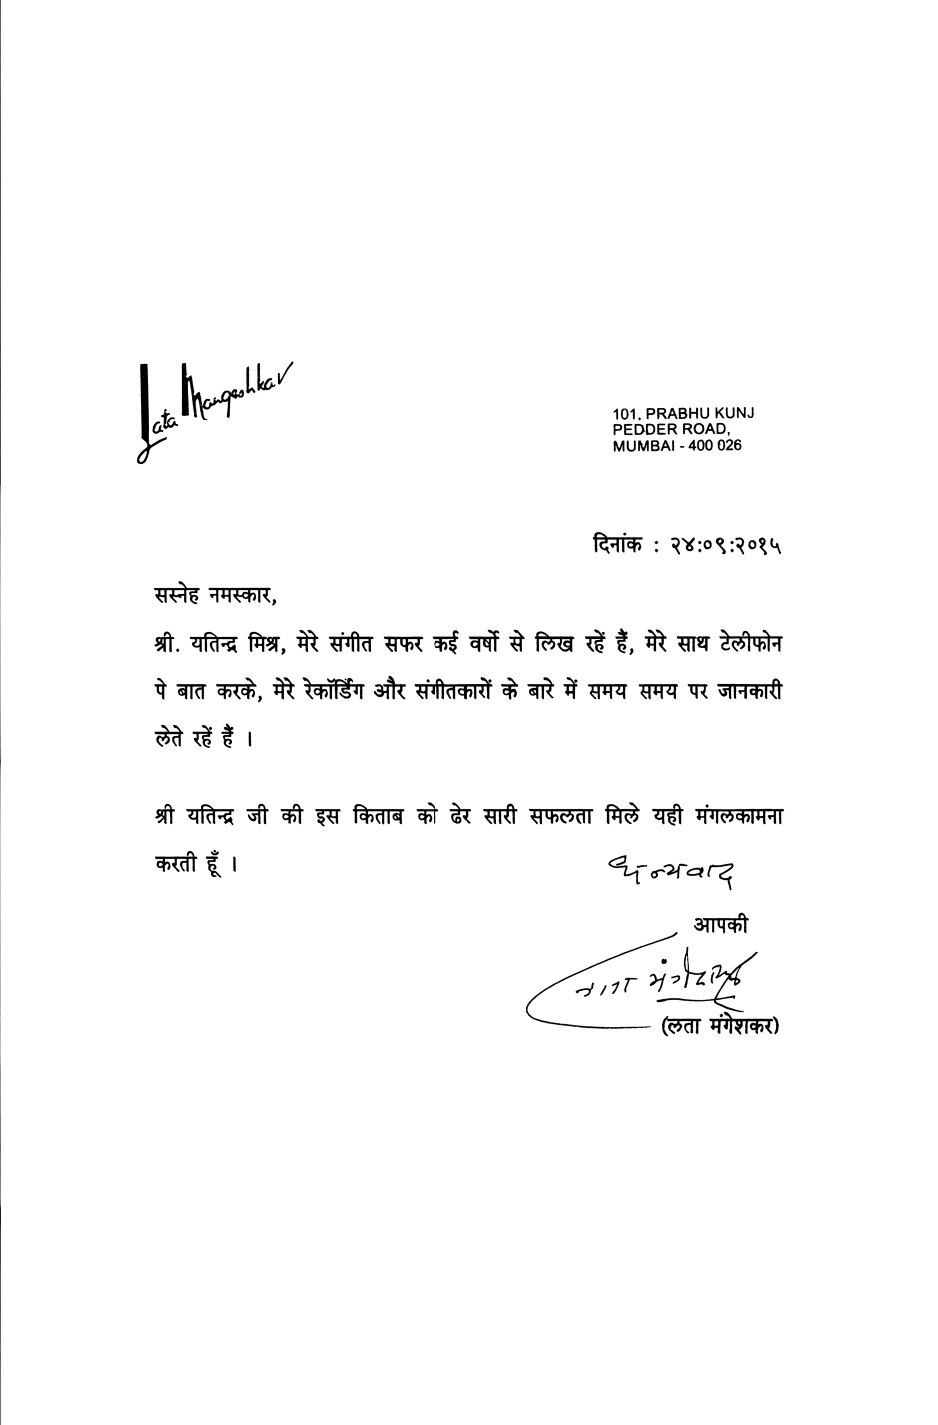 Lata ji's letter to Yatindra Mishr 